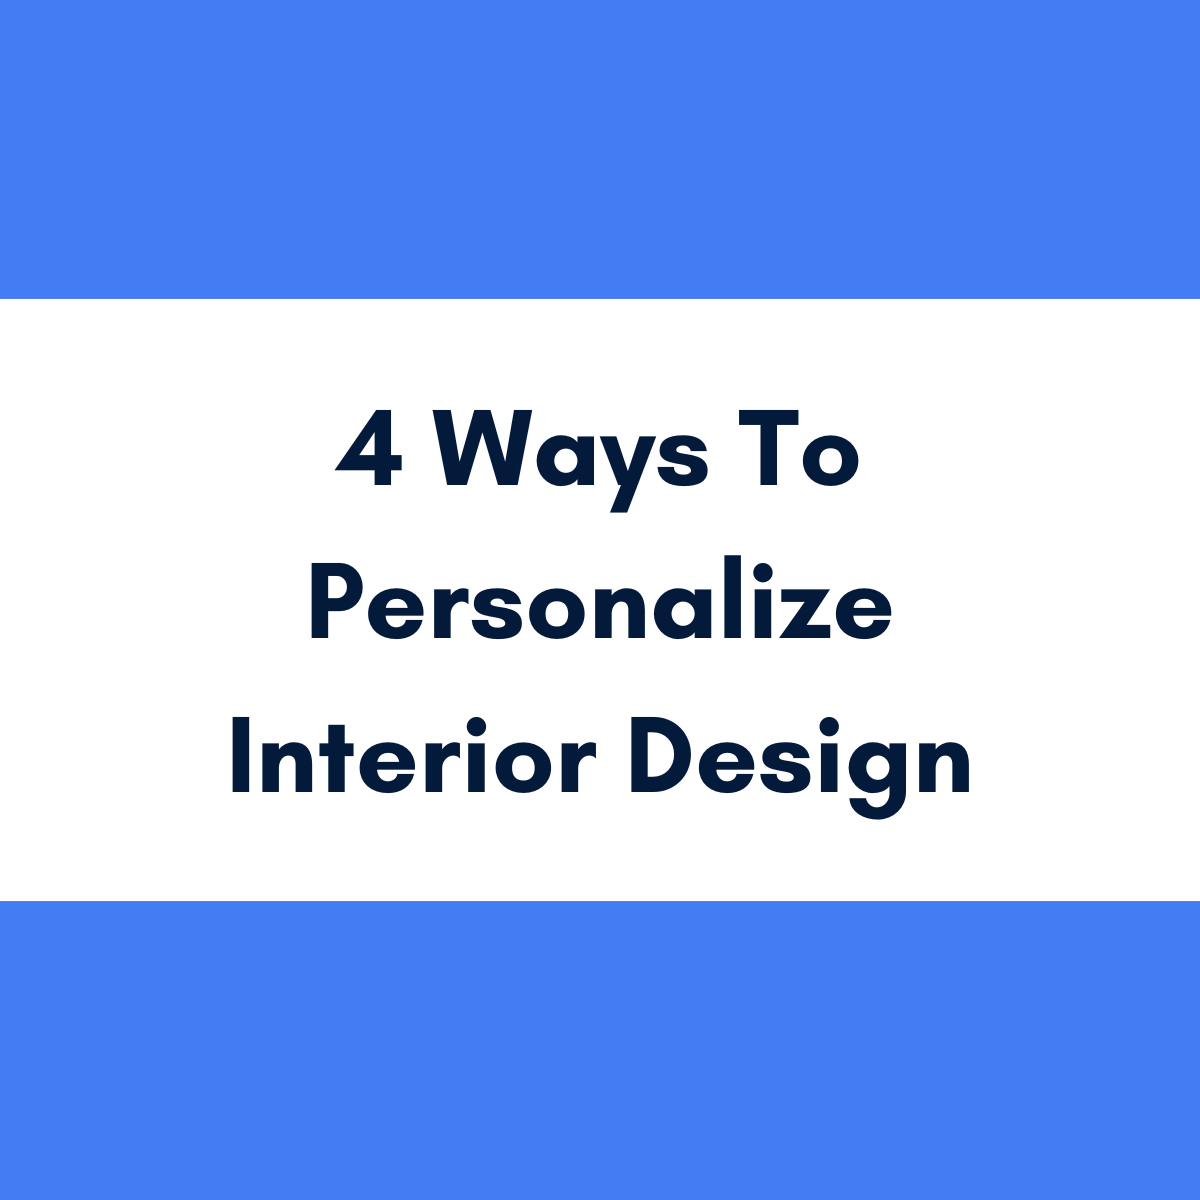 4 Ways to Personalize Interior Design